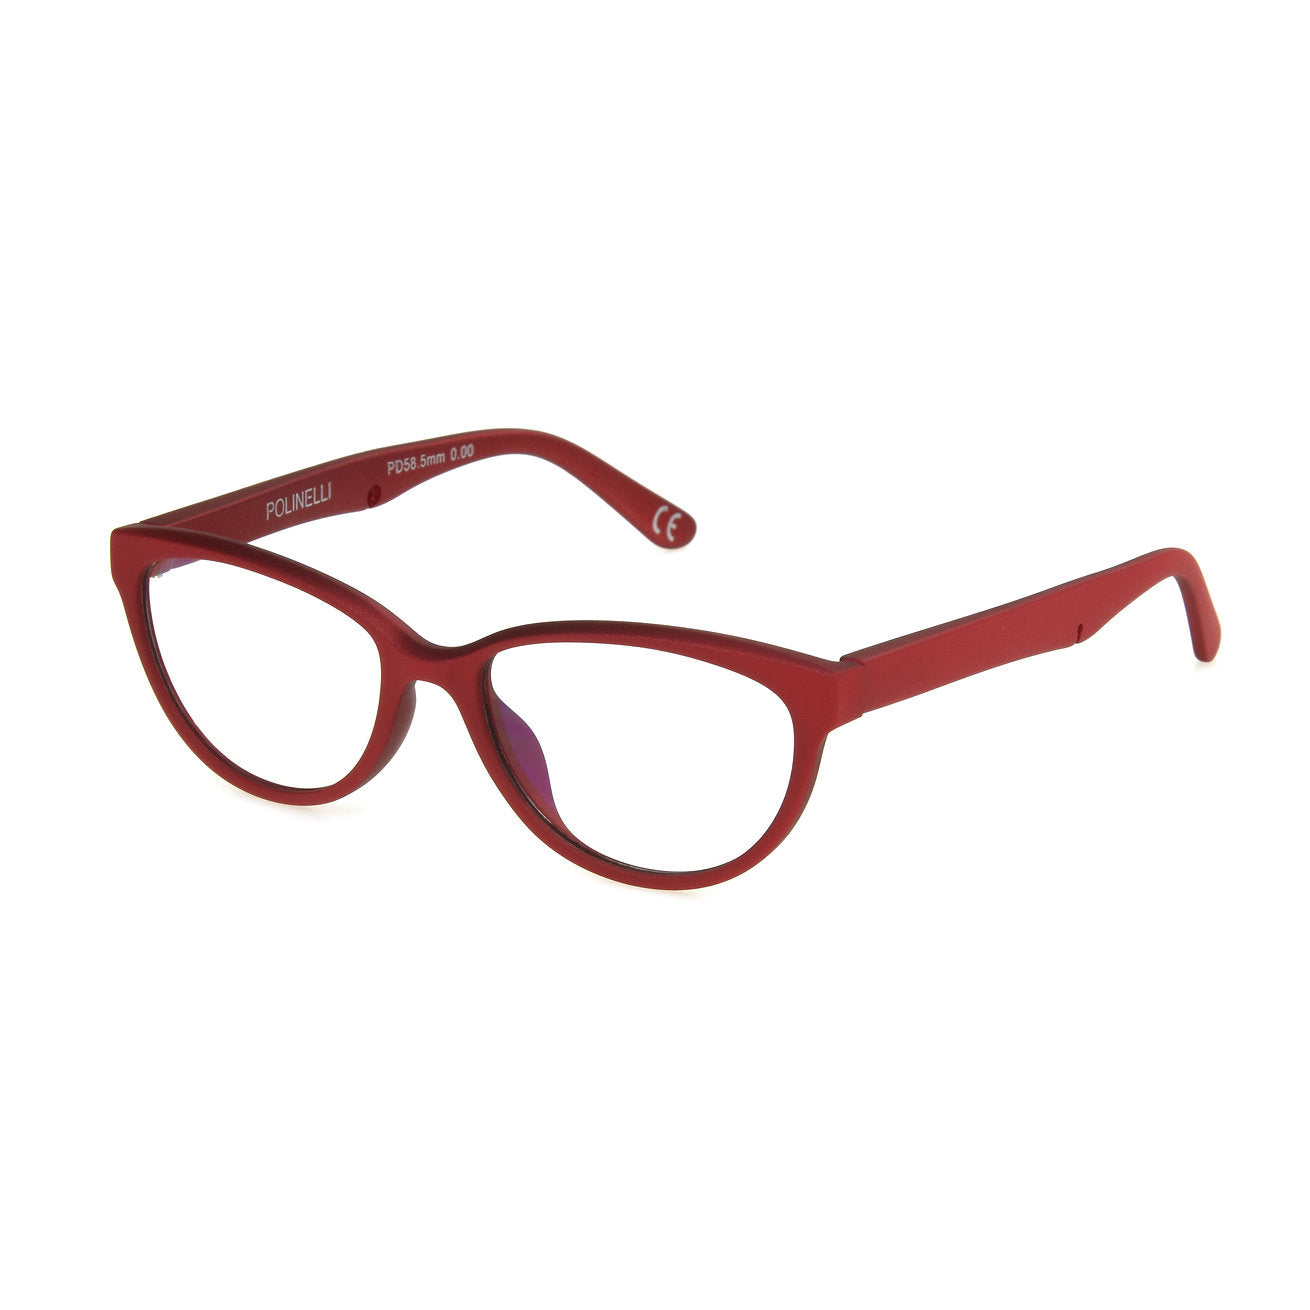 Polinelli eyeglasses model P201 metallic red